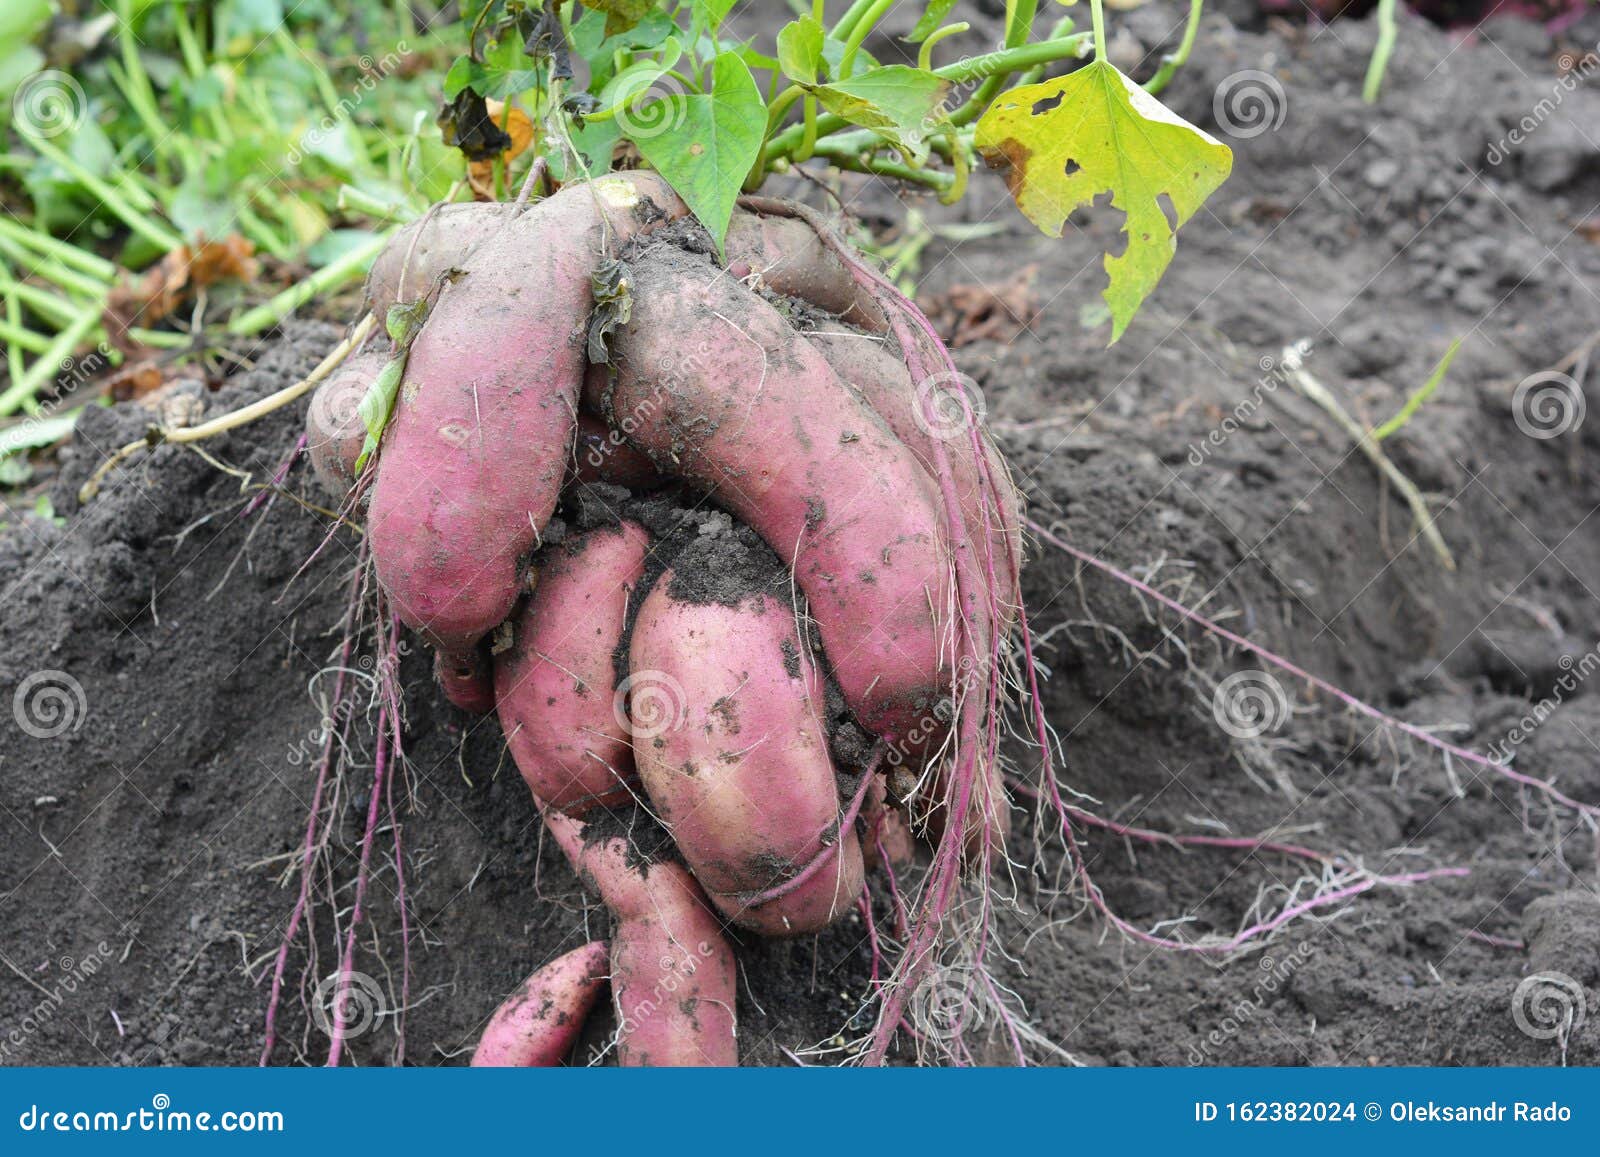 the sweet potato, kumara, yam ipomoea batatas harvest. sweet potato ornamental